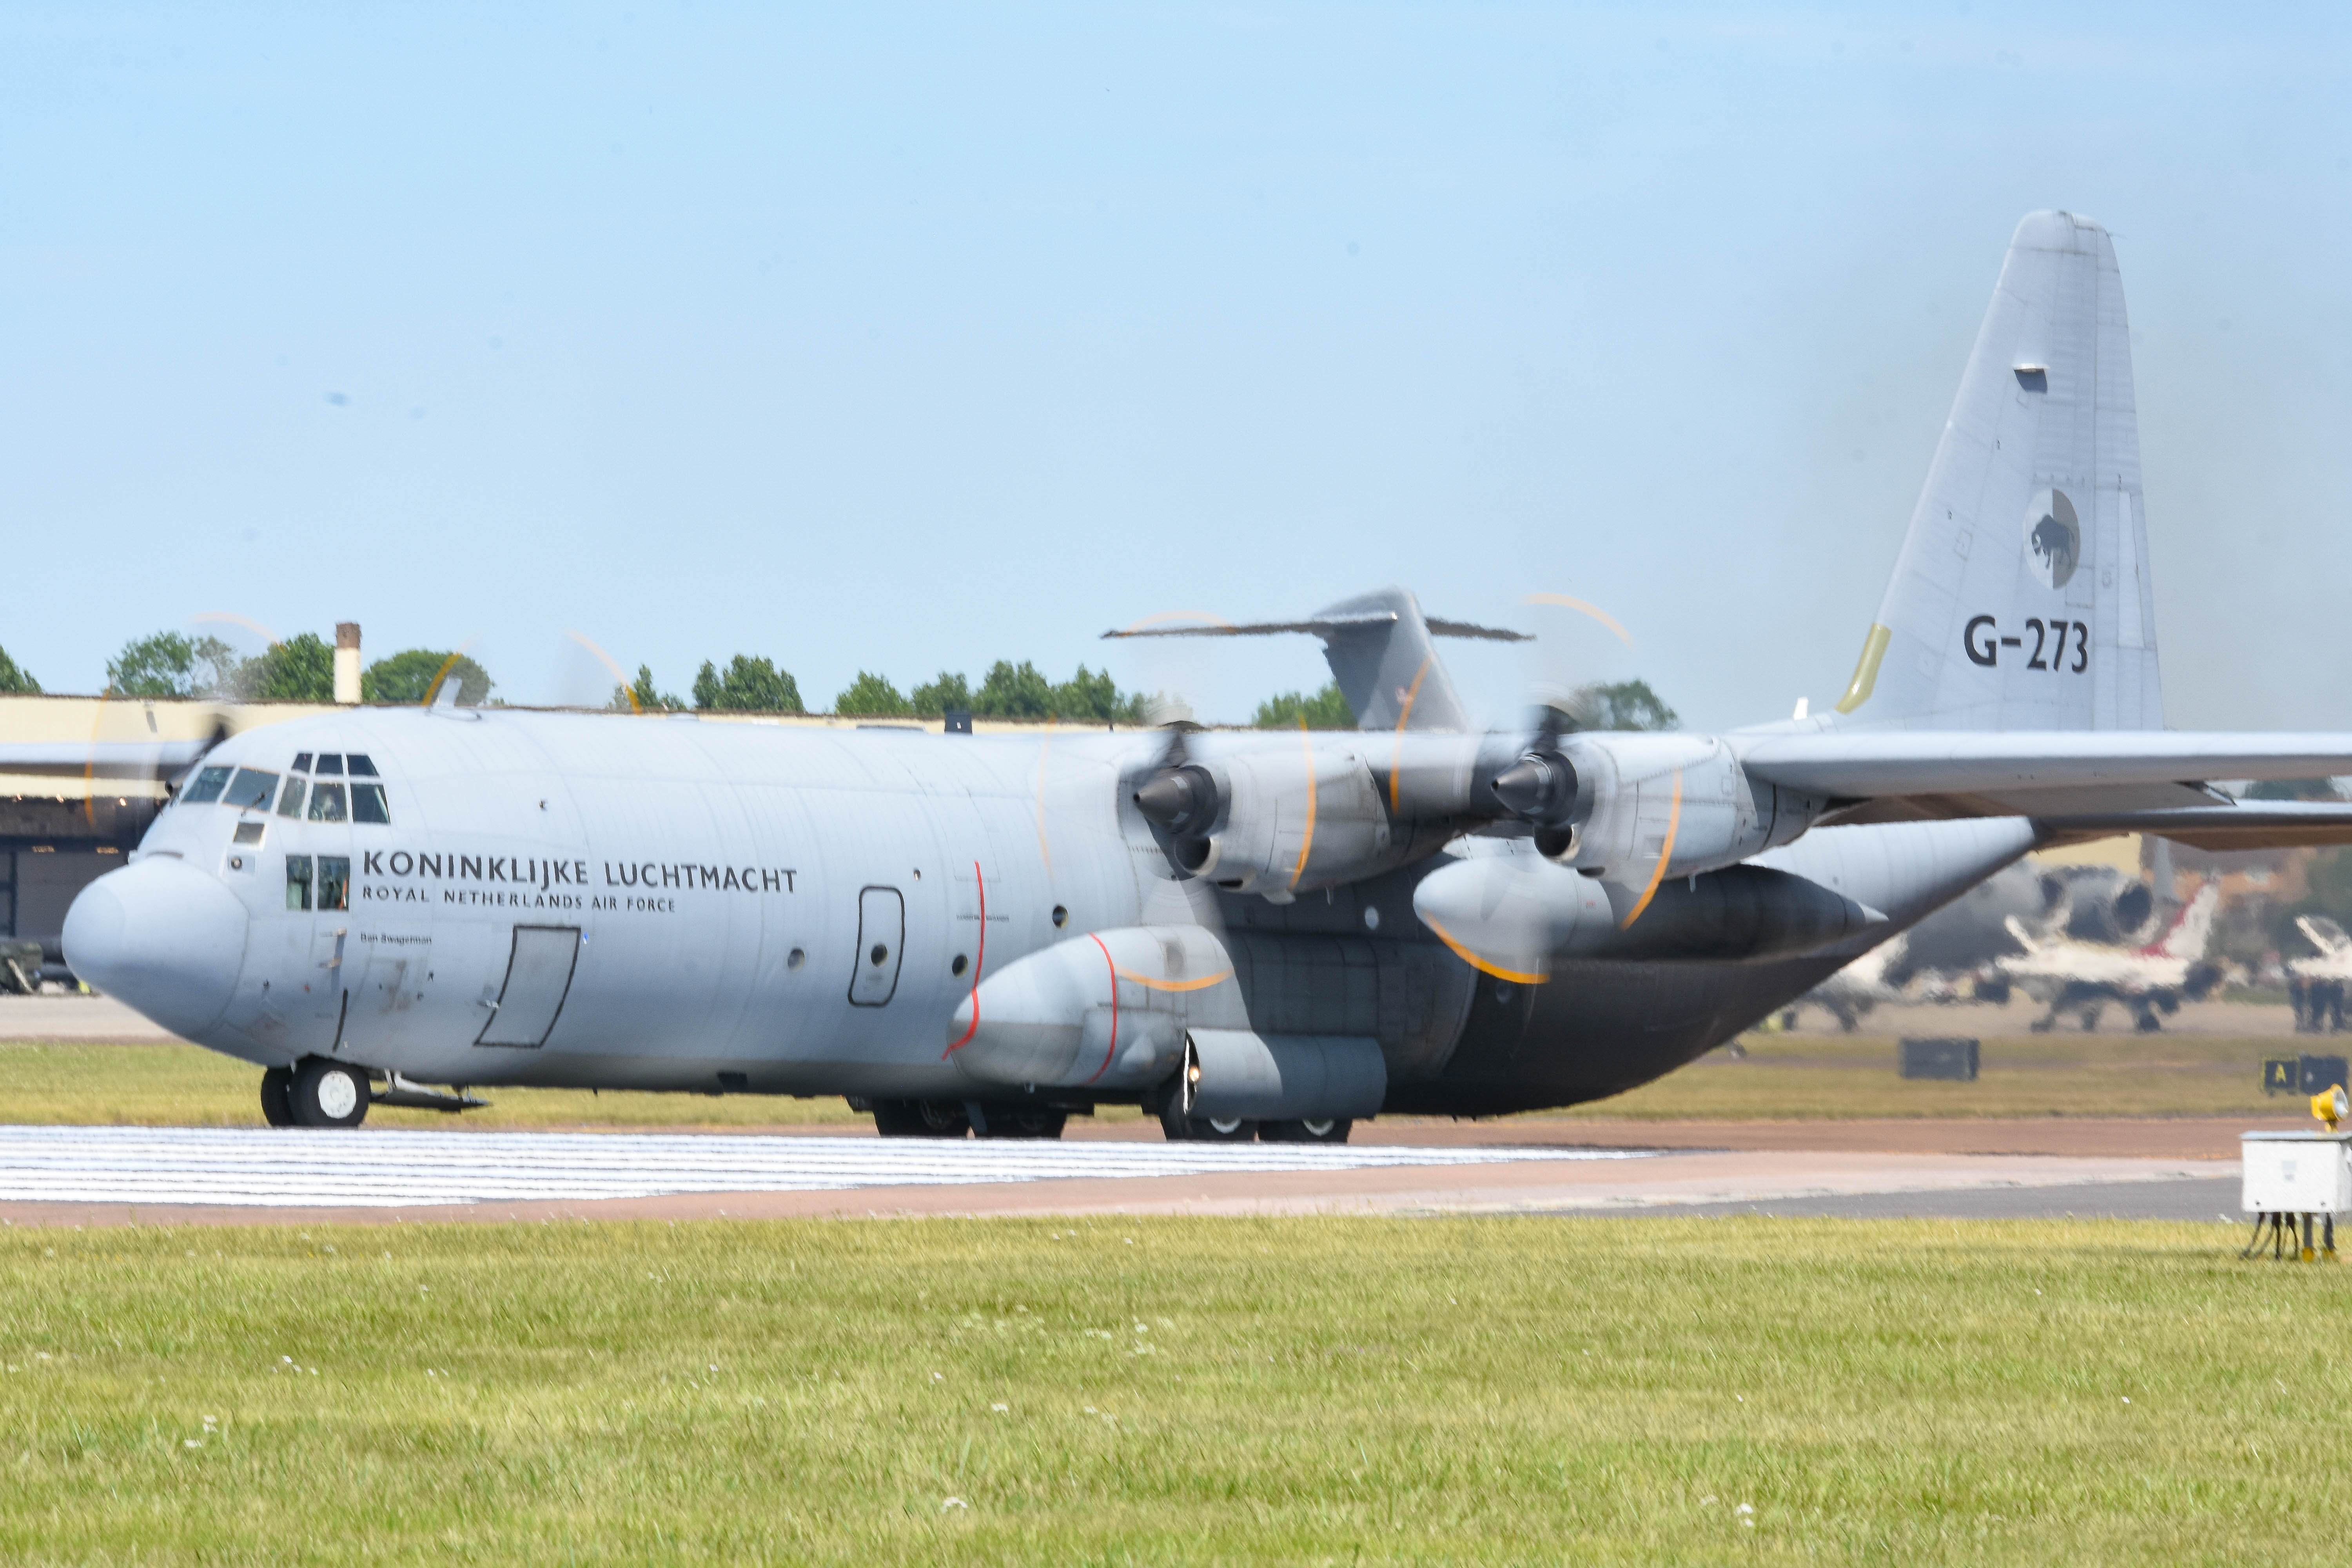 G-273/G273 RNlAF - Royal Netherlands Air Force Lockheed C-130 Hercules Airframe Information - AVSpotters.com